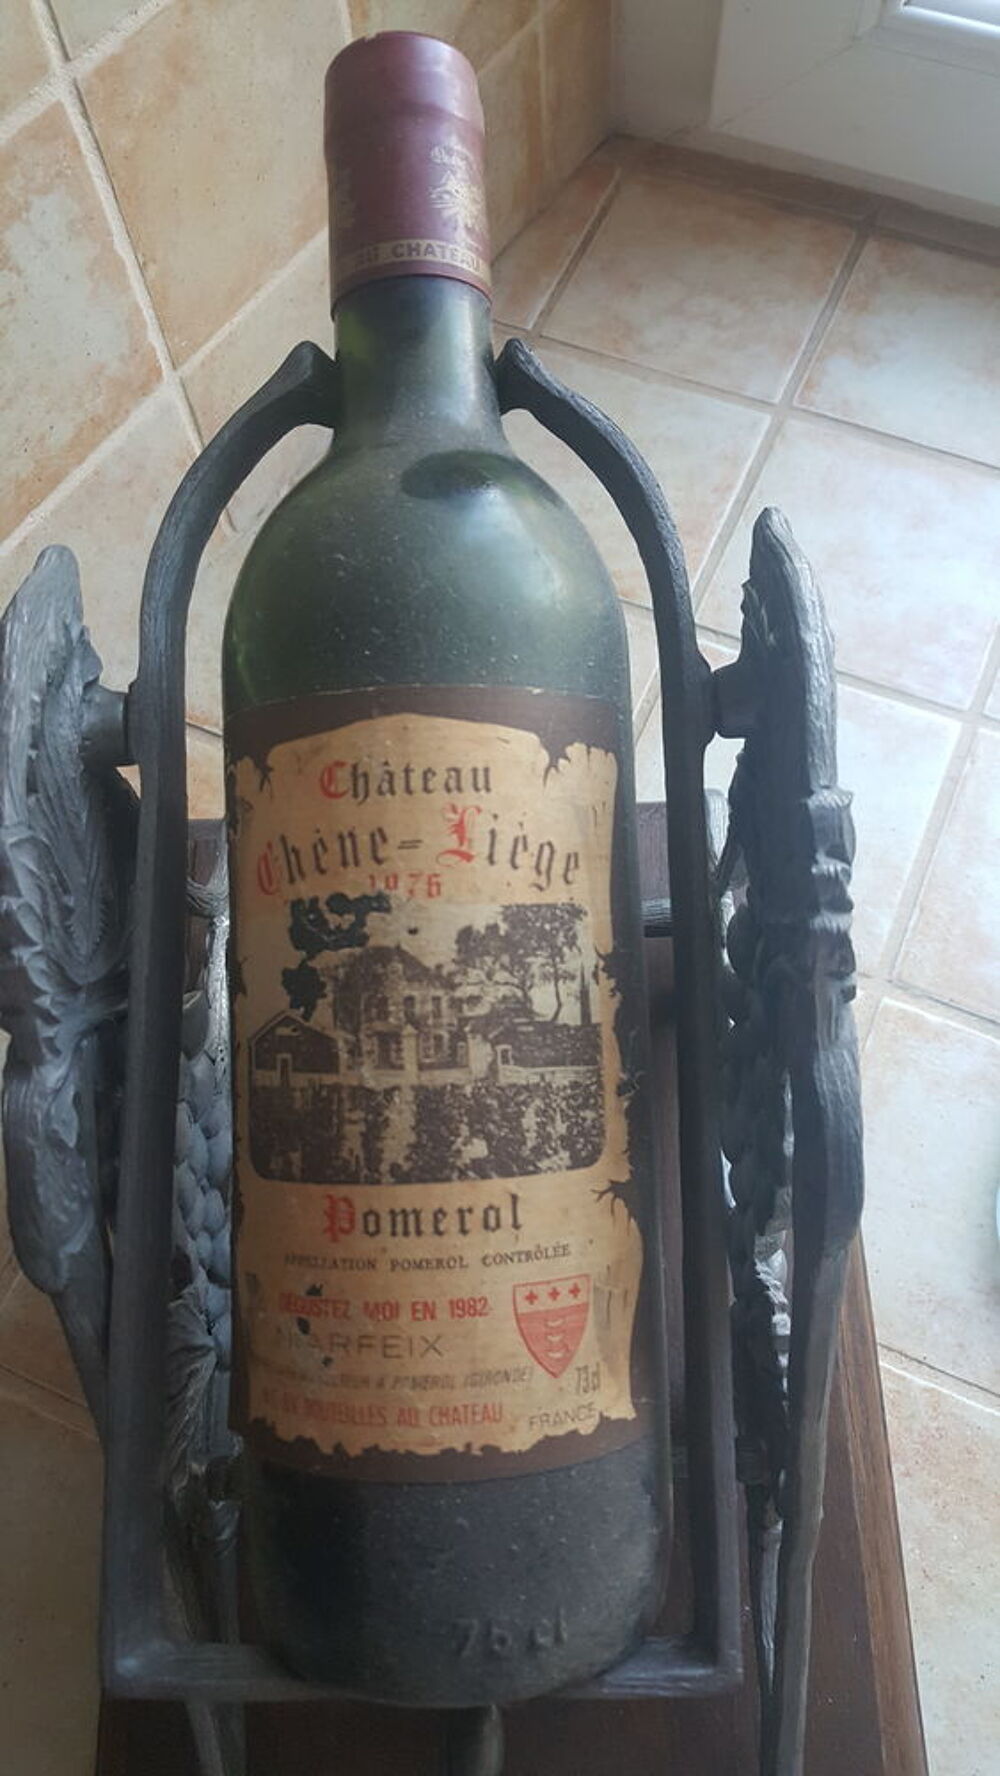 vin de pomerol chateau Ch&ecirc;ne-Li&egrave;ge 1976 Dcoration